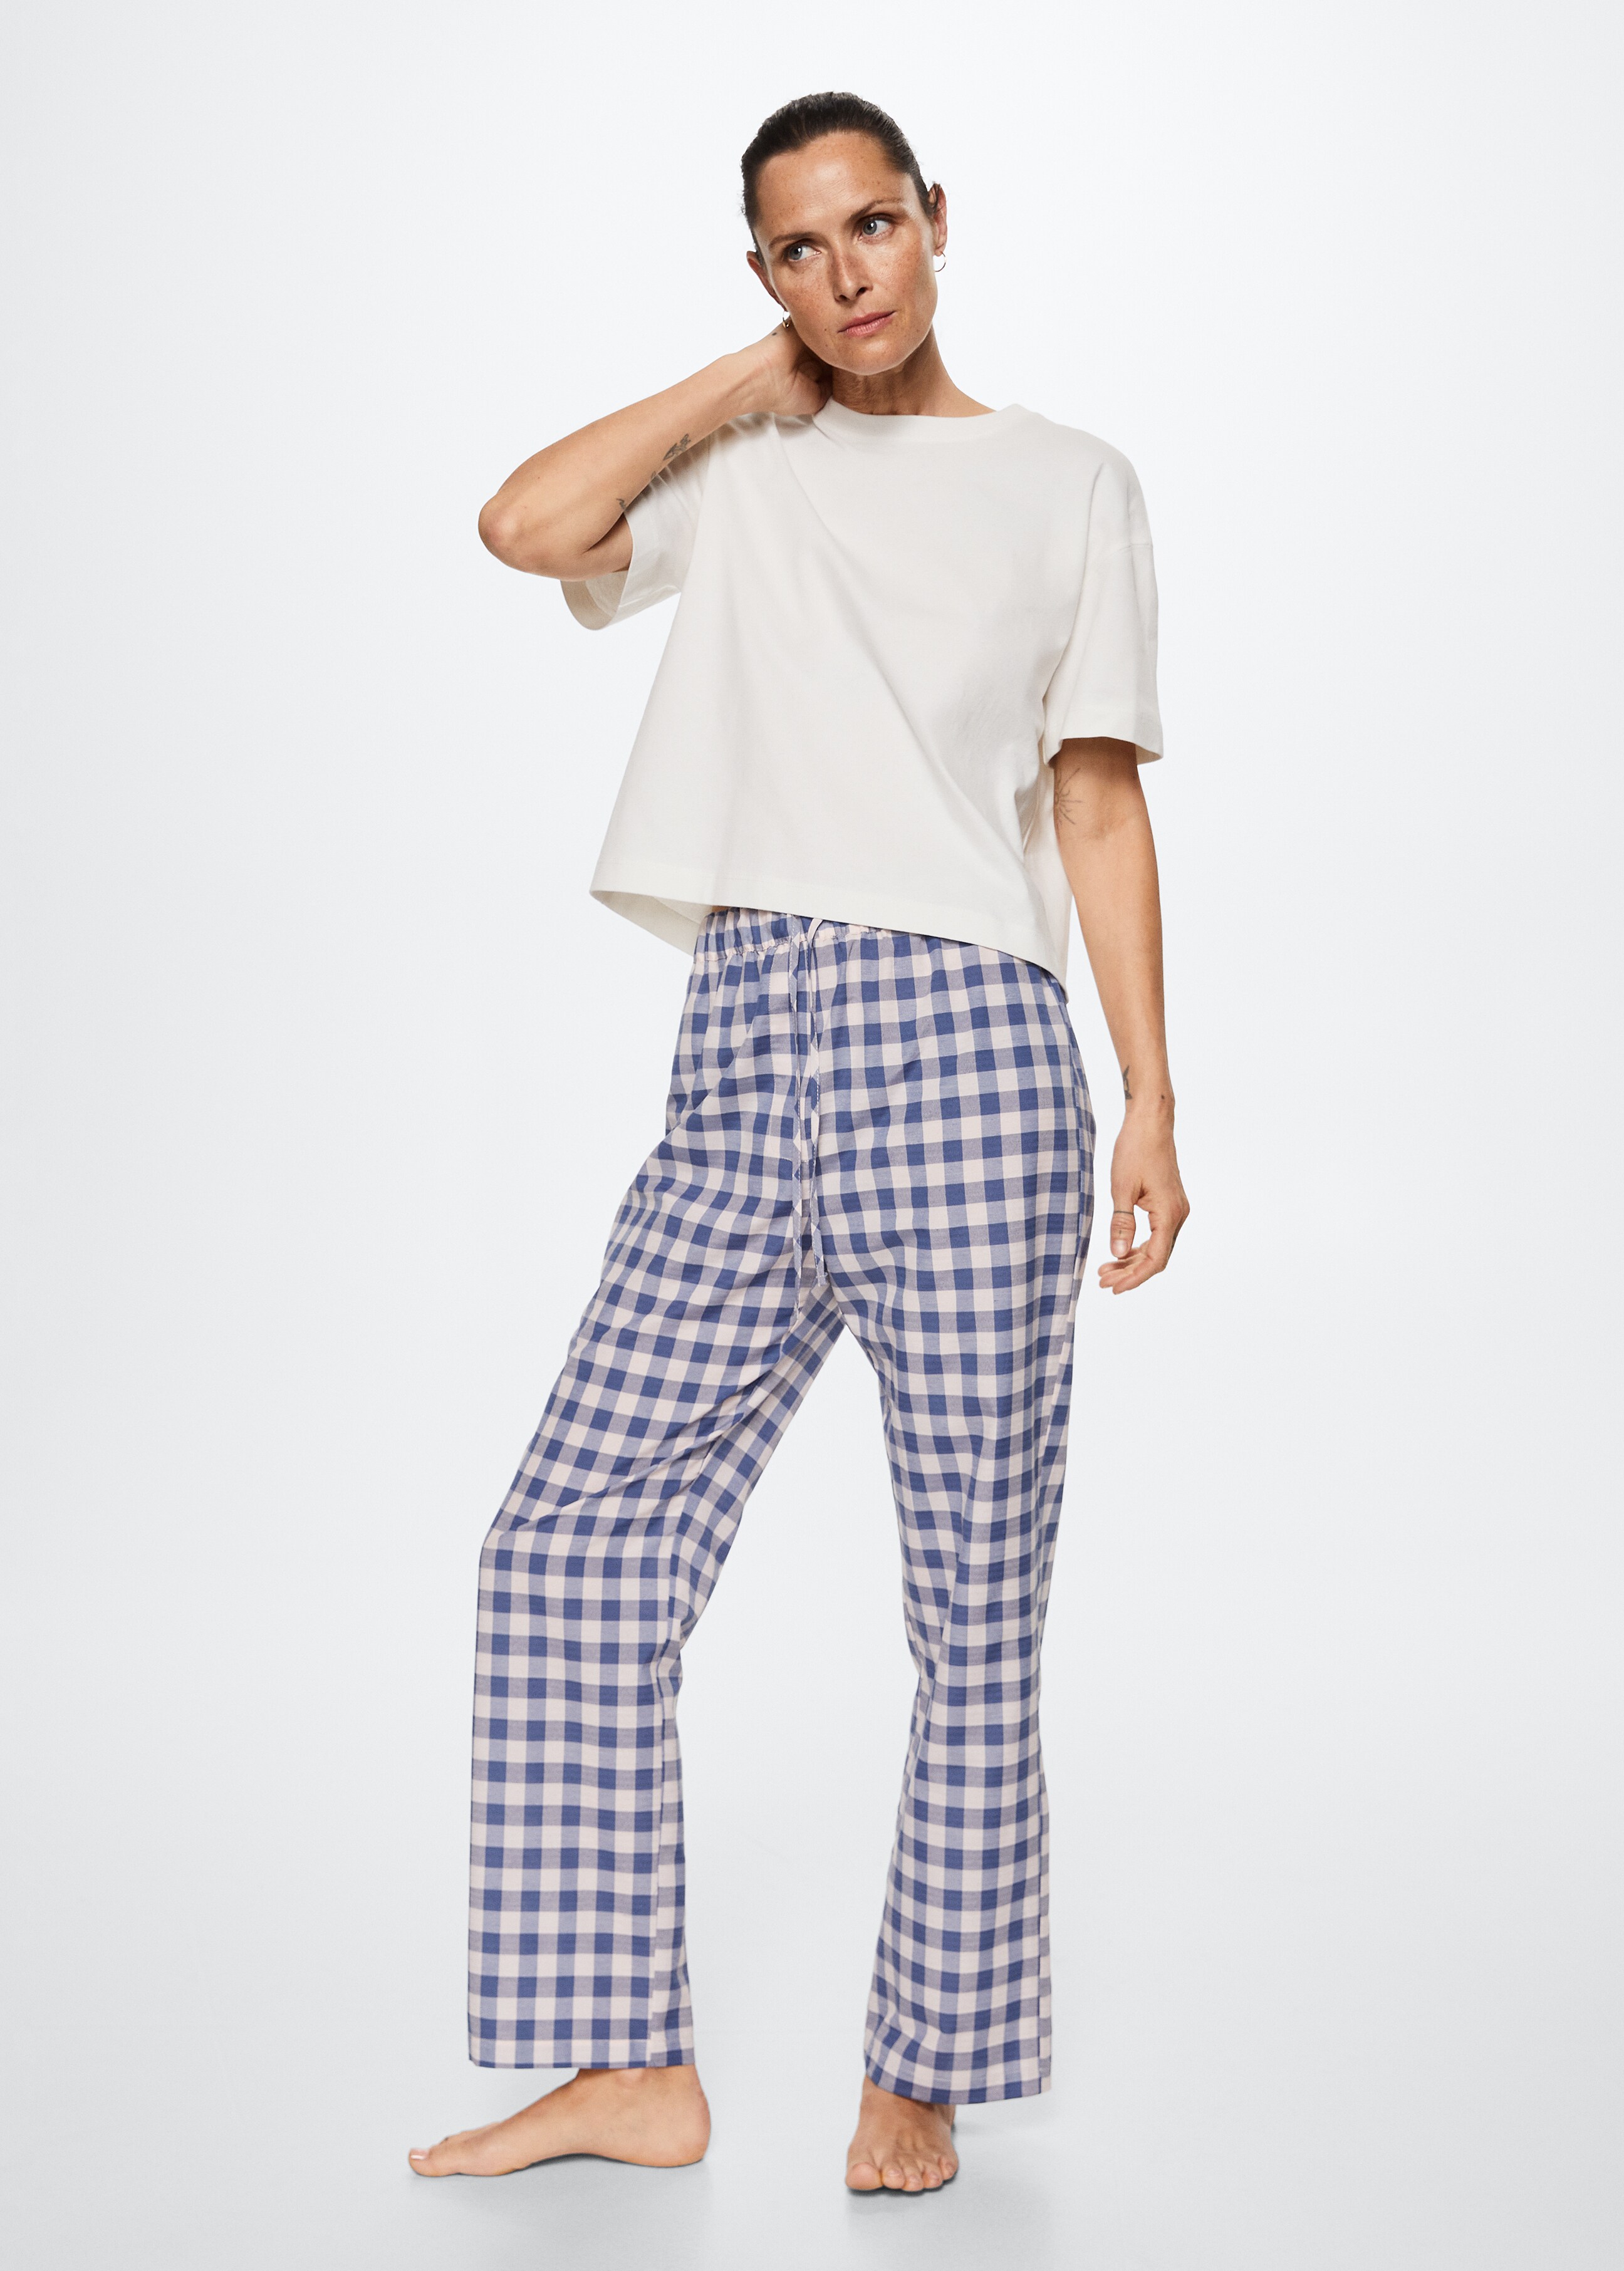 Camiseta pijama cómodo - Plano general